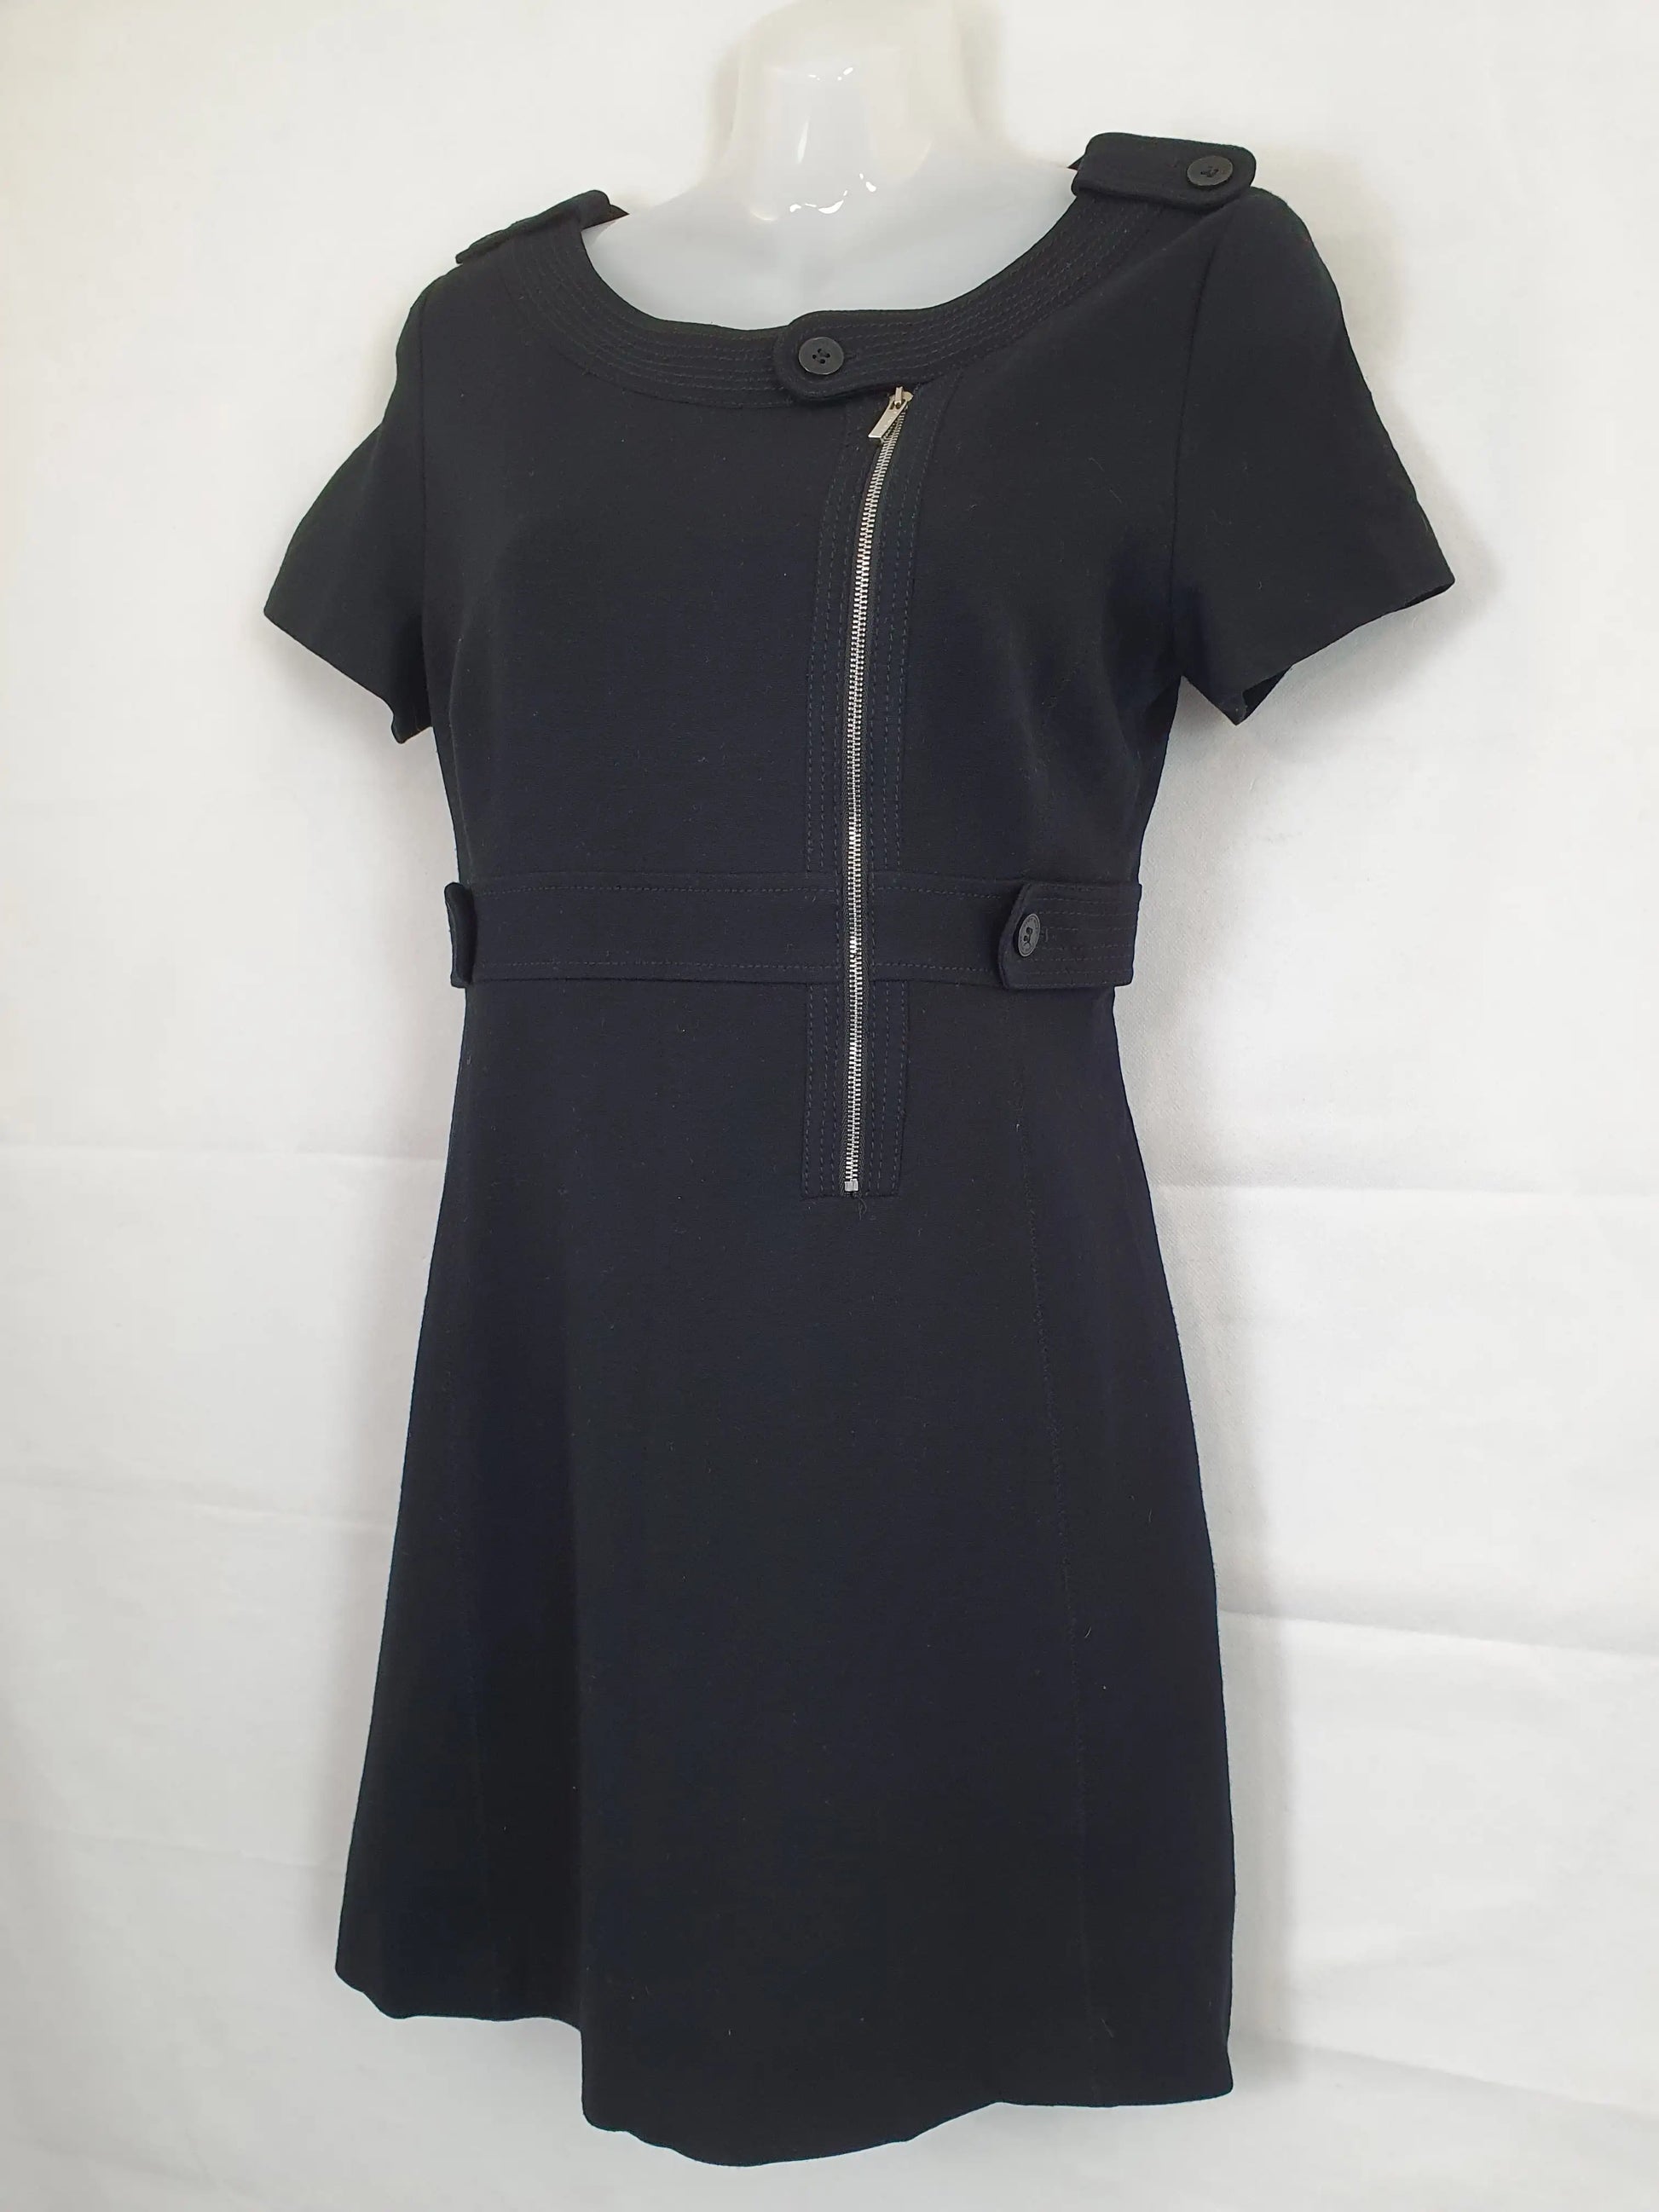 Karen Millen Office Staple Zippered Mini Dress Size 12 by SwapUp-Online Second Hand Store-Online Thrift Store